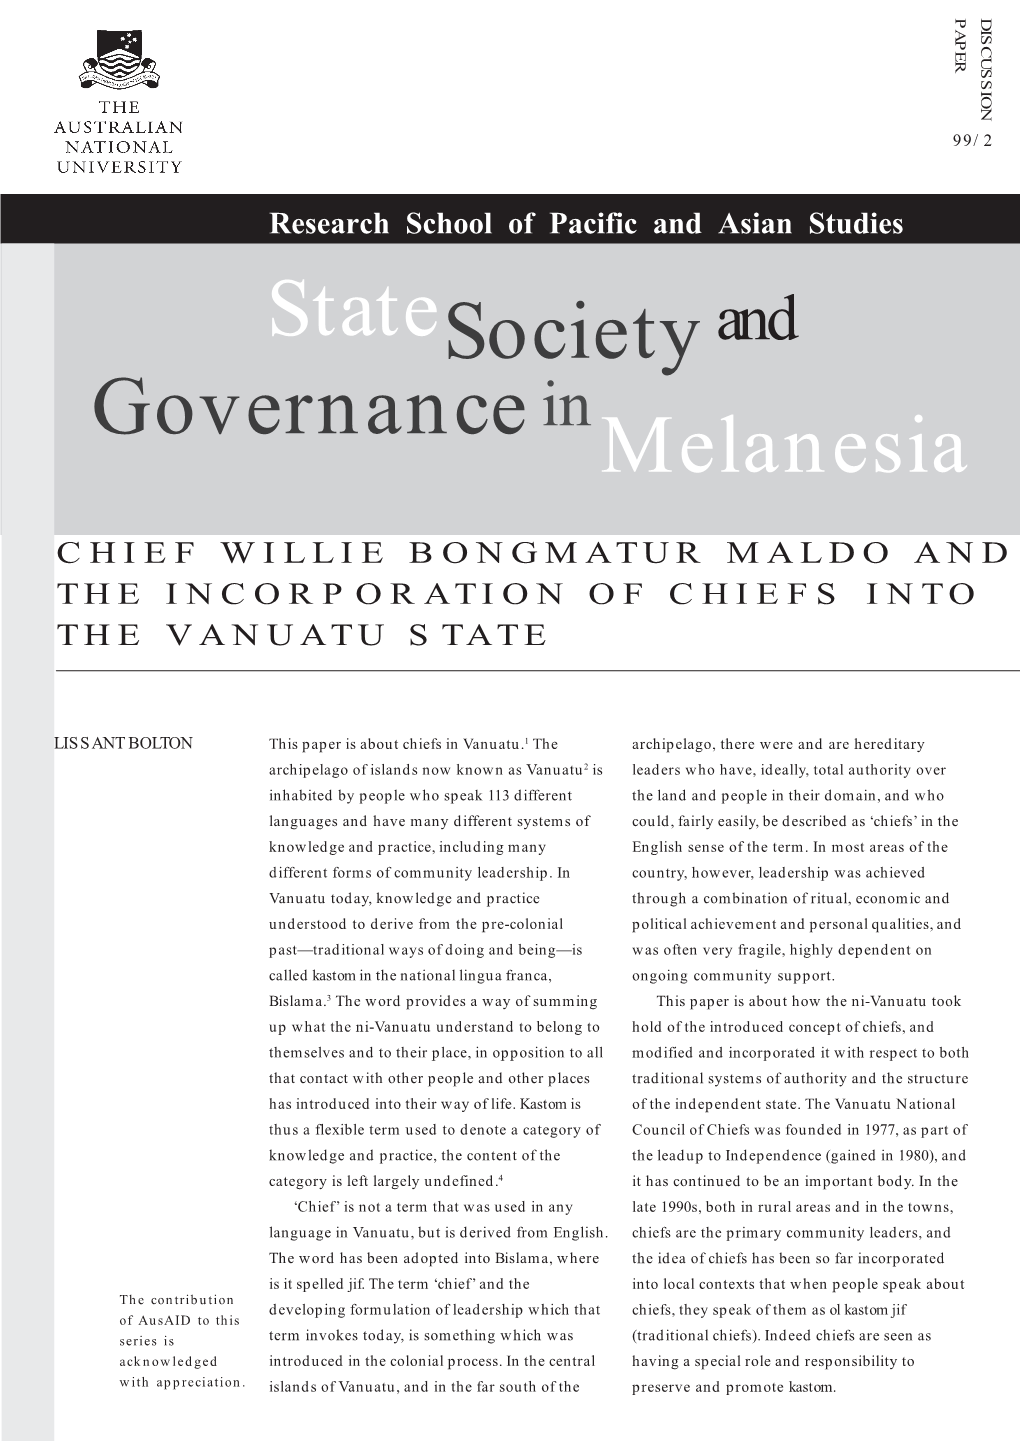 State Societyand Melanesia Governance